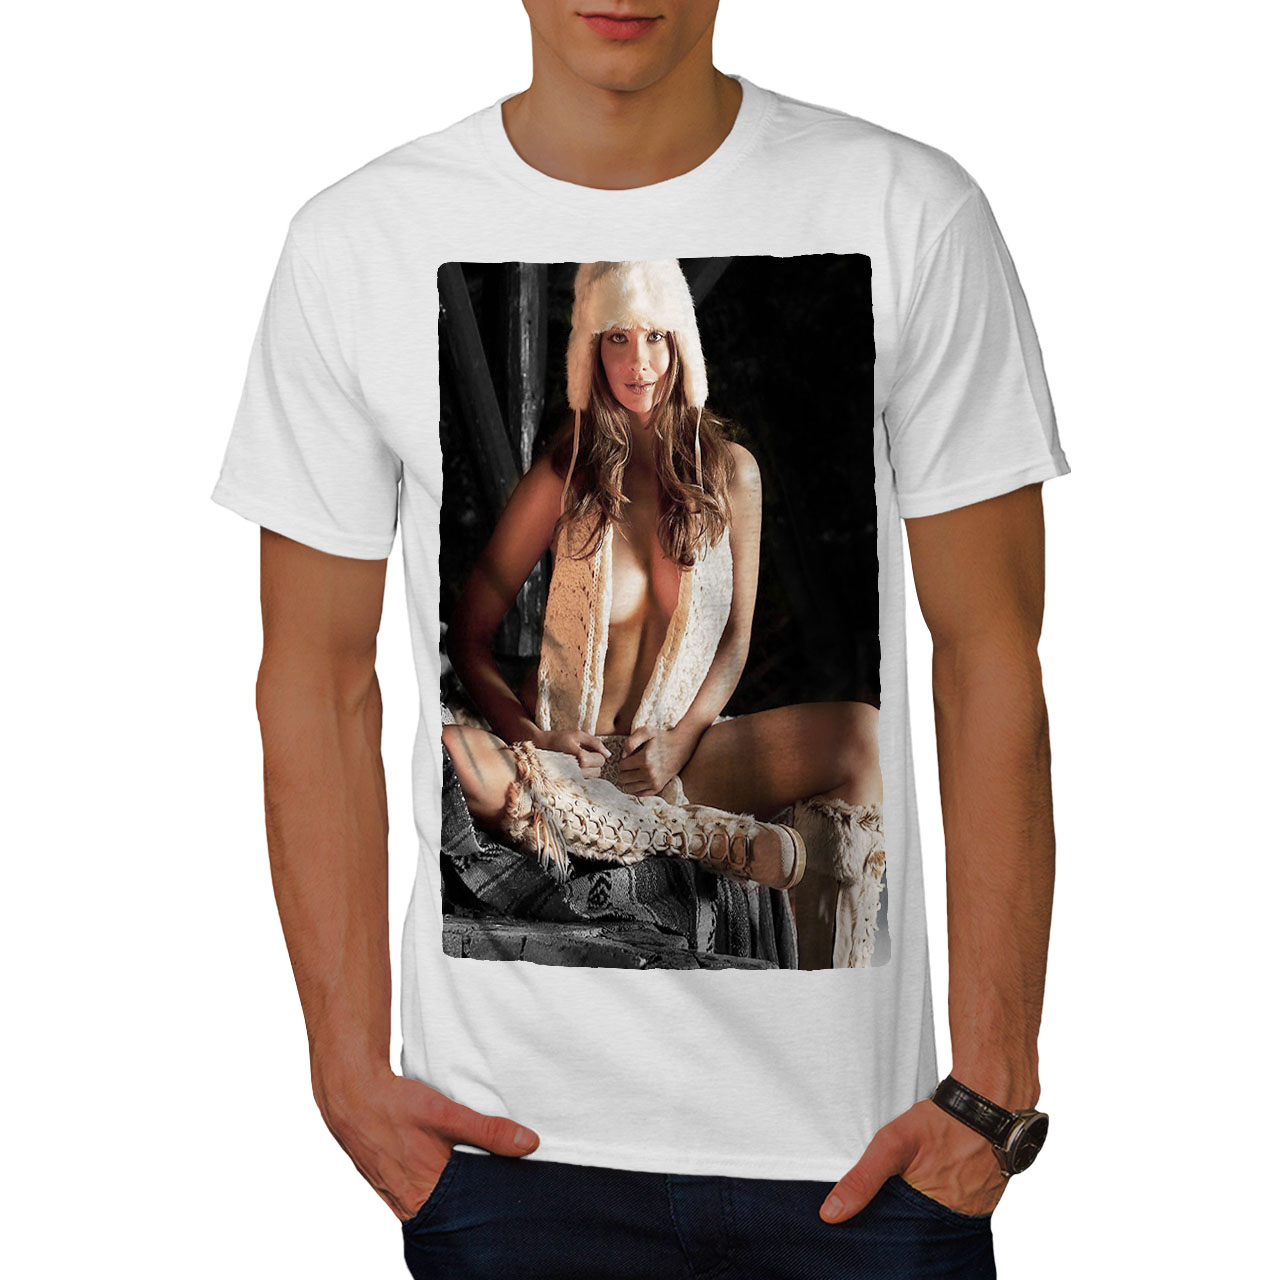 Wellcoda Nude Woman Hot Girl Sexy Mens T Shirt Lady Graphic Design